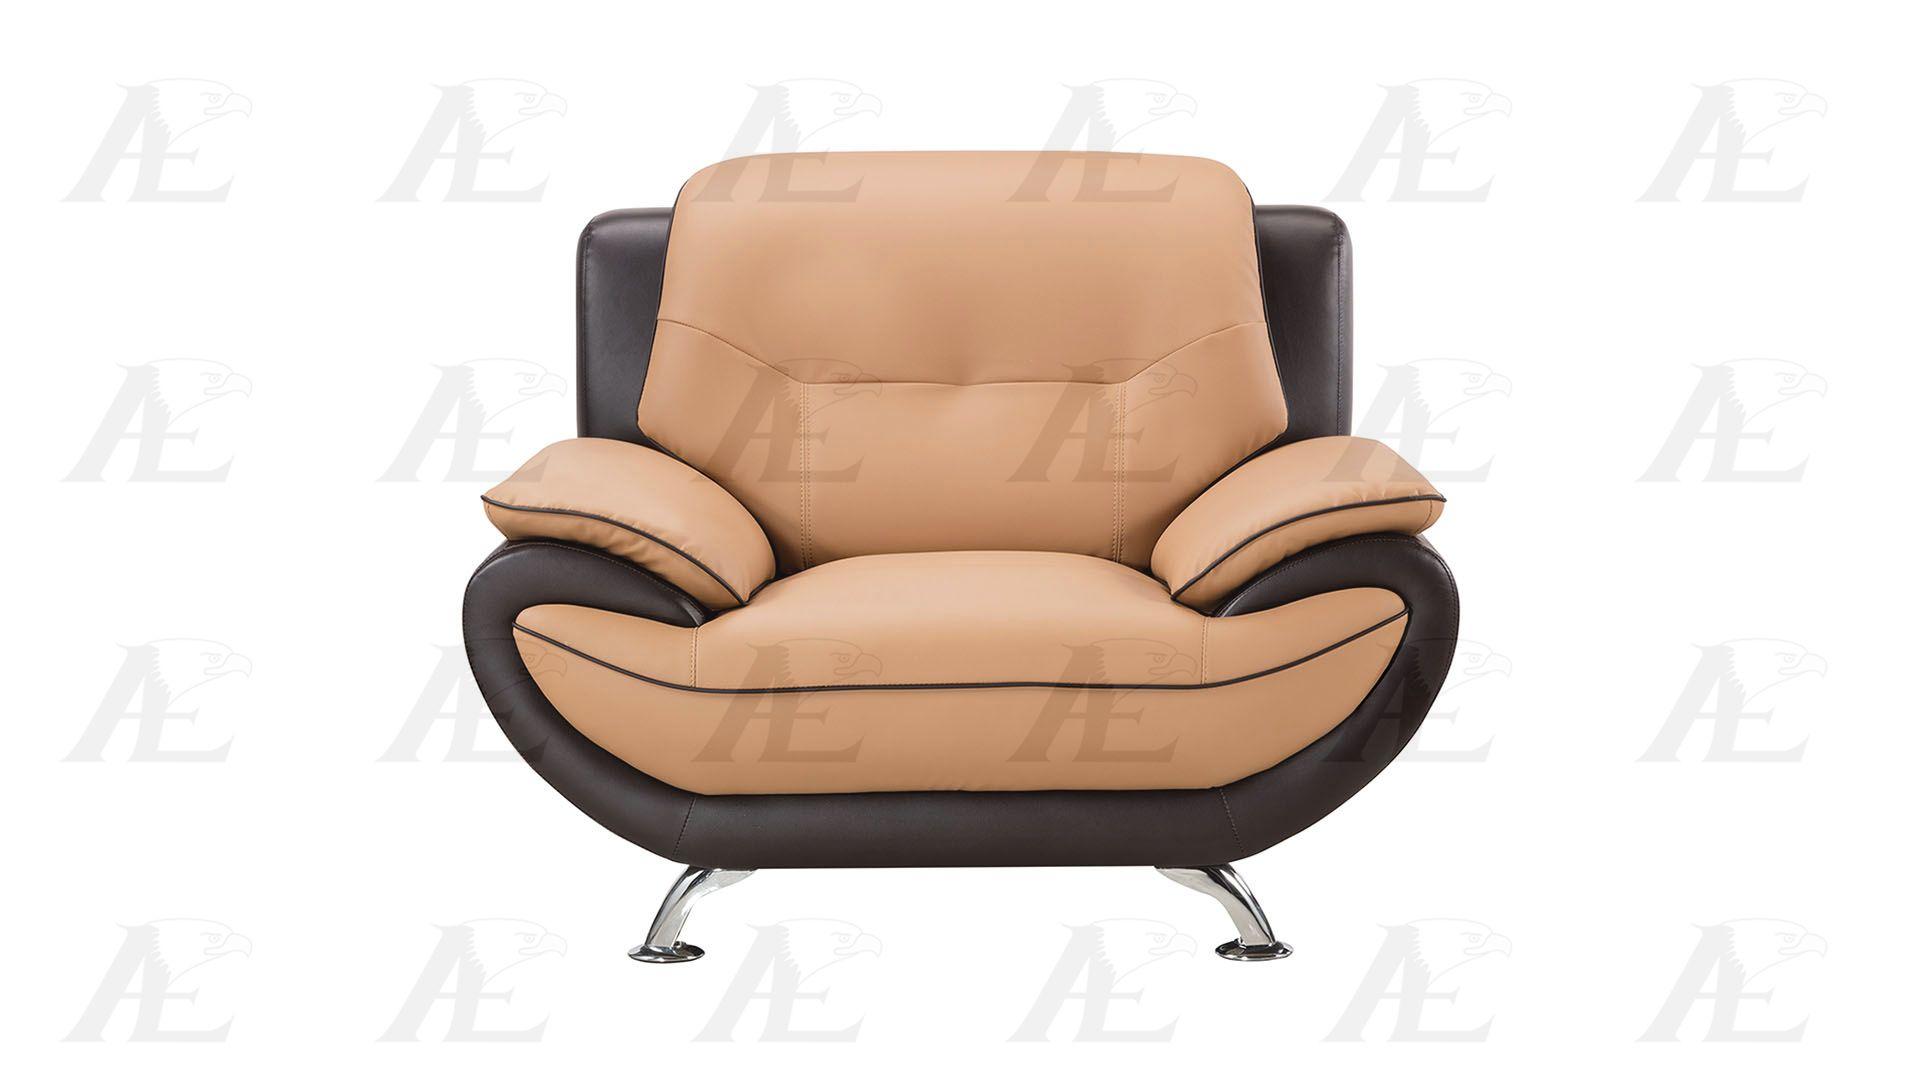 

    
AE208-YO.BR 3Pcs American Eagle Furniture Sofa Loveseat and Chair Set
